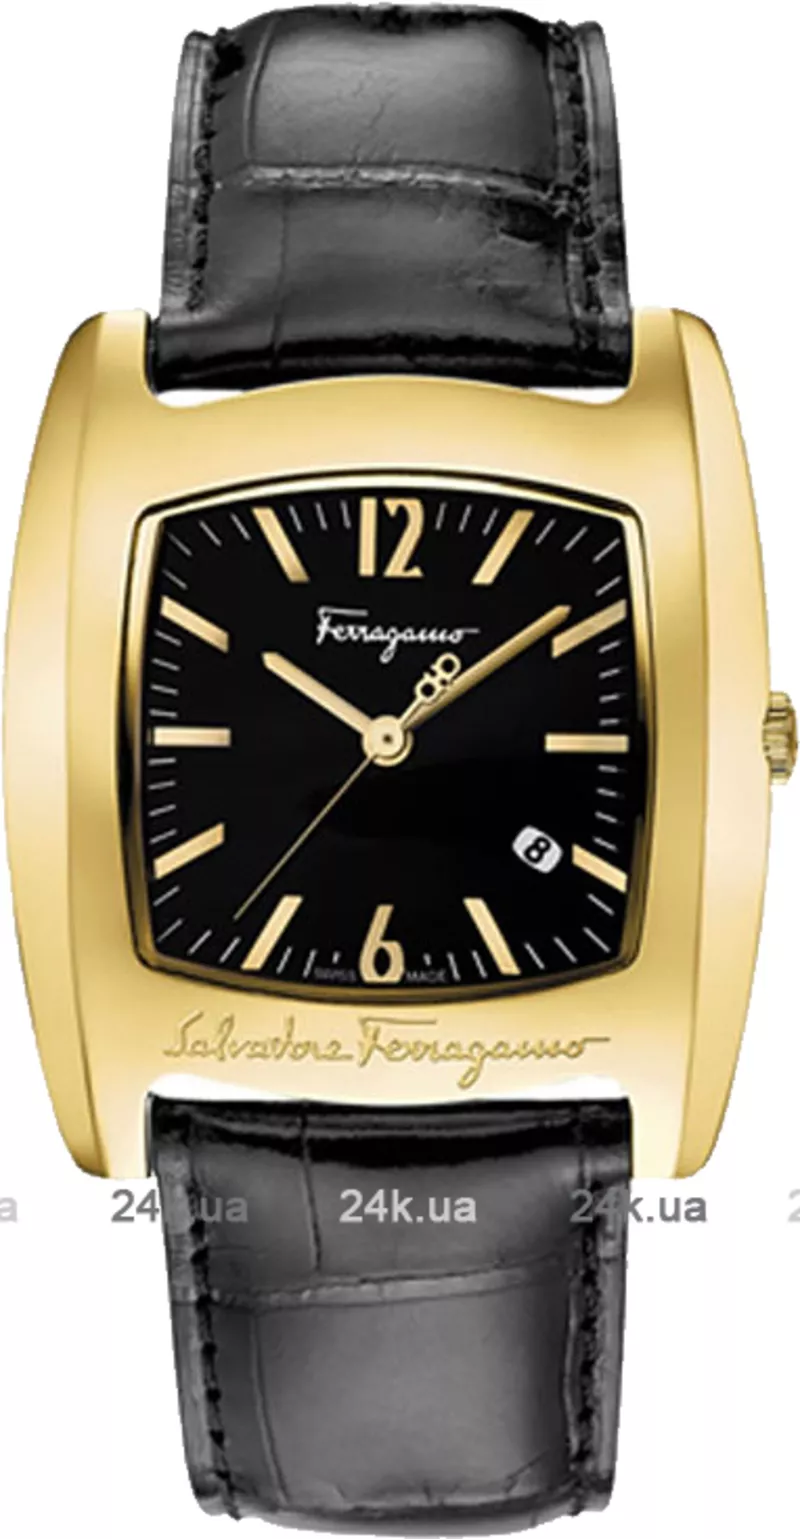 Часы Salvatore Ferragamo Fr51lbq4009 s009